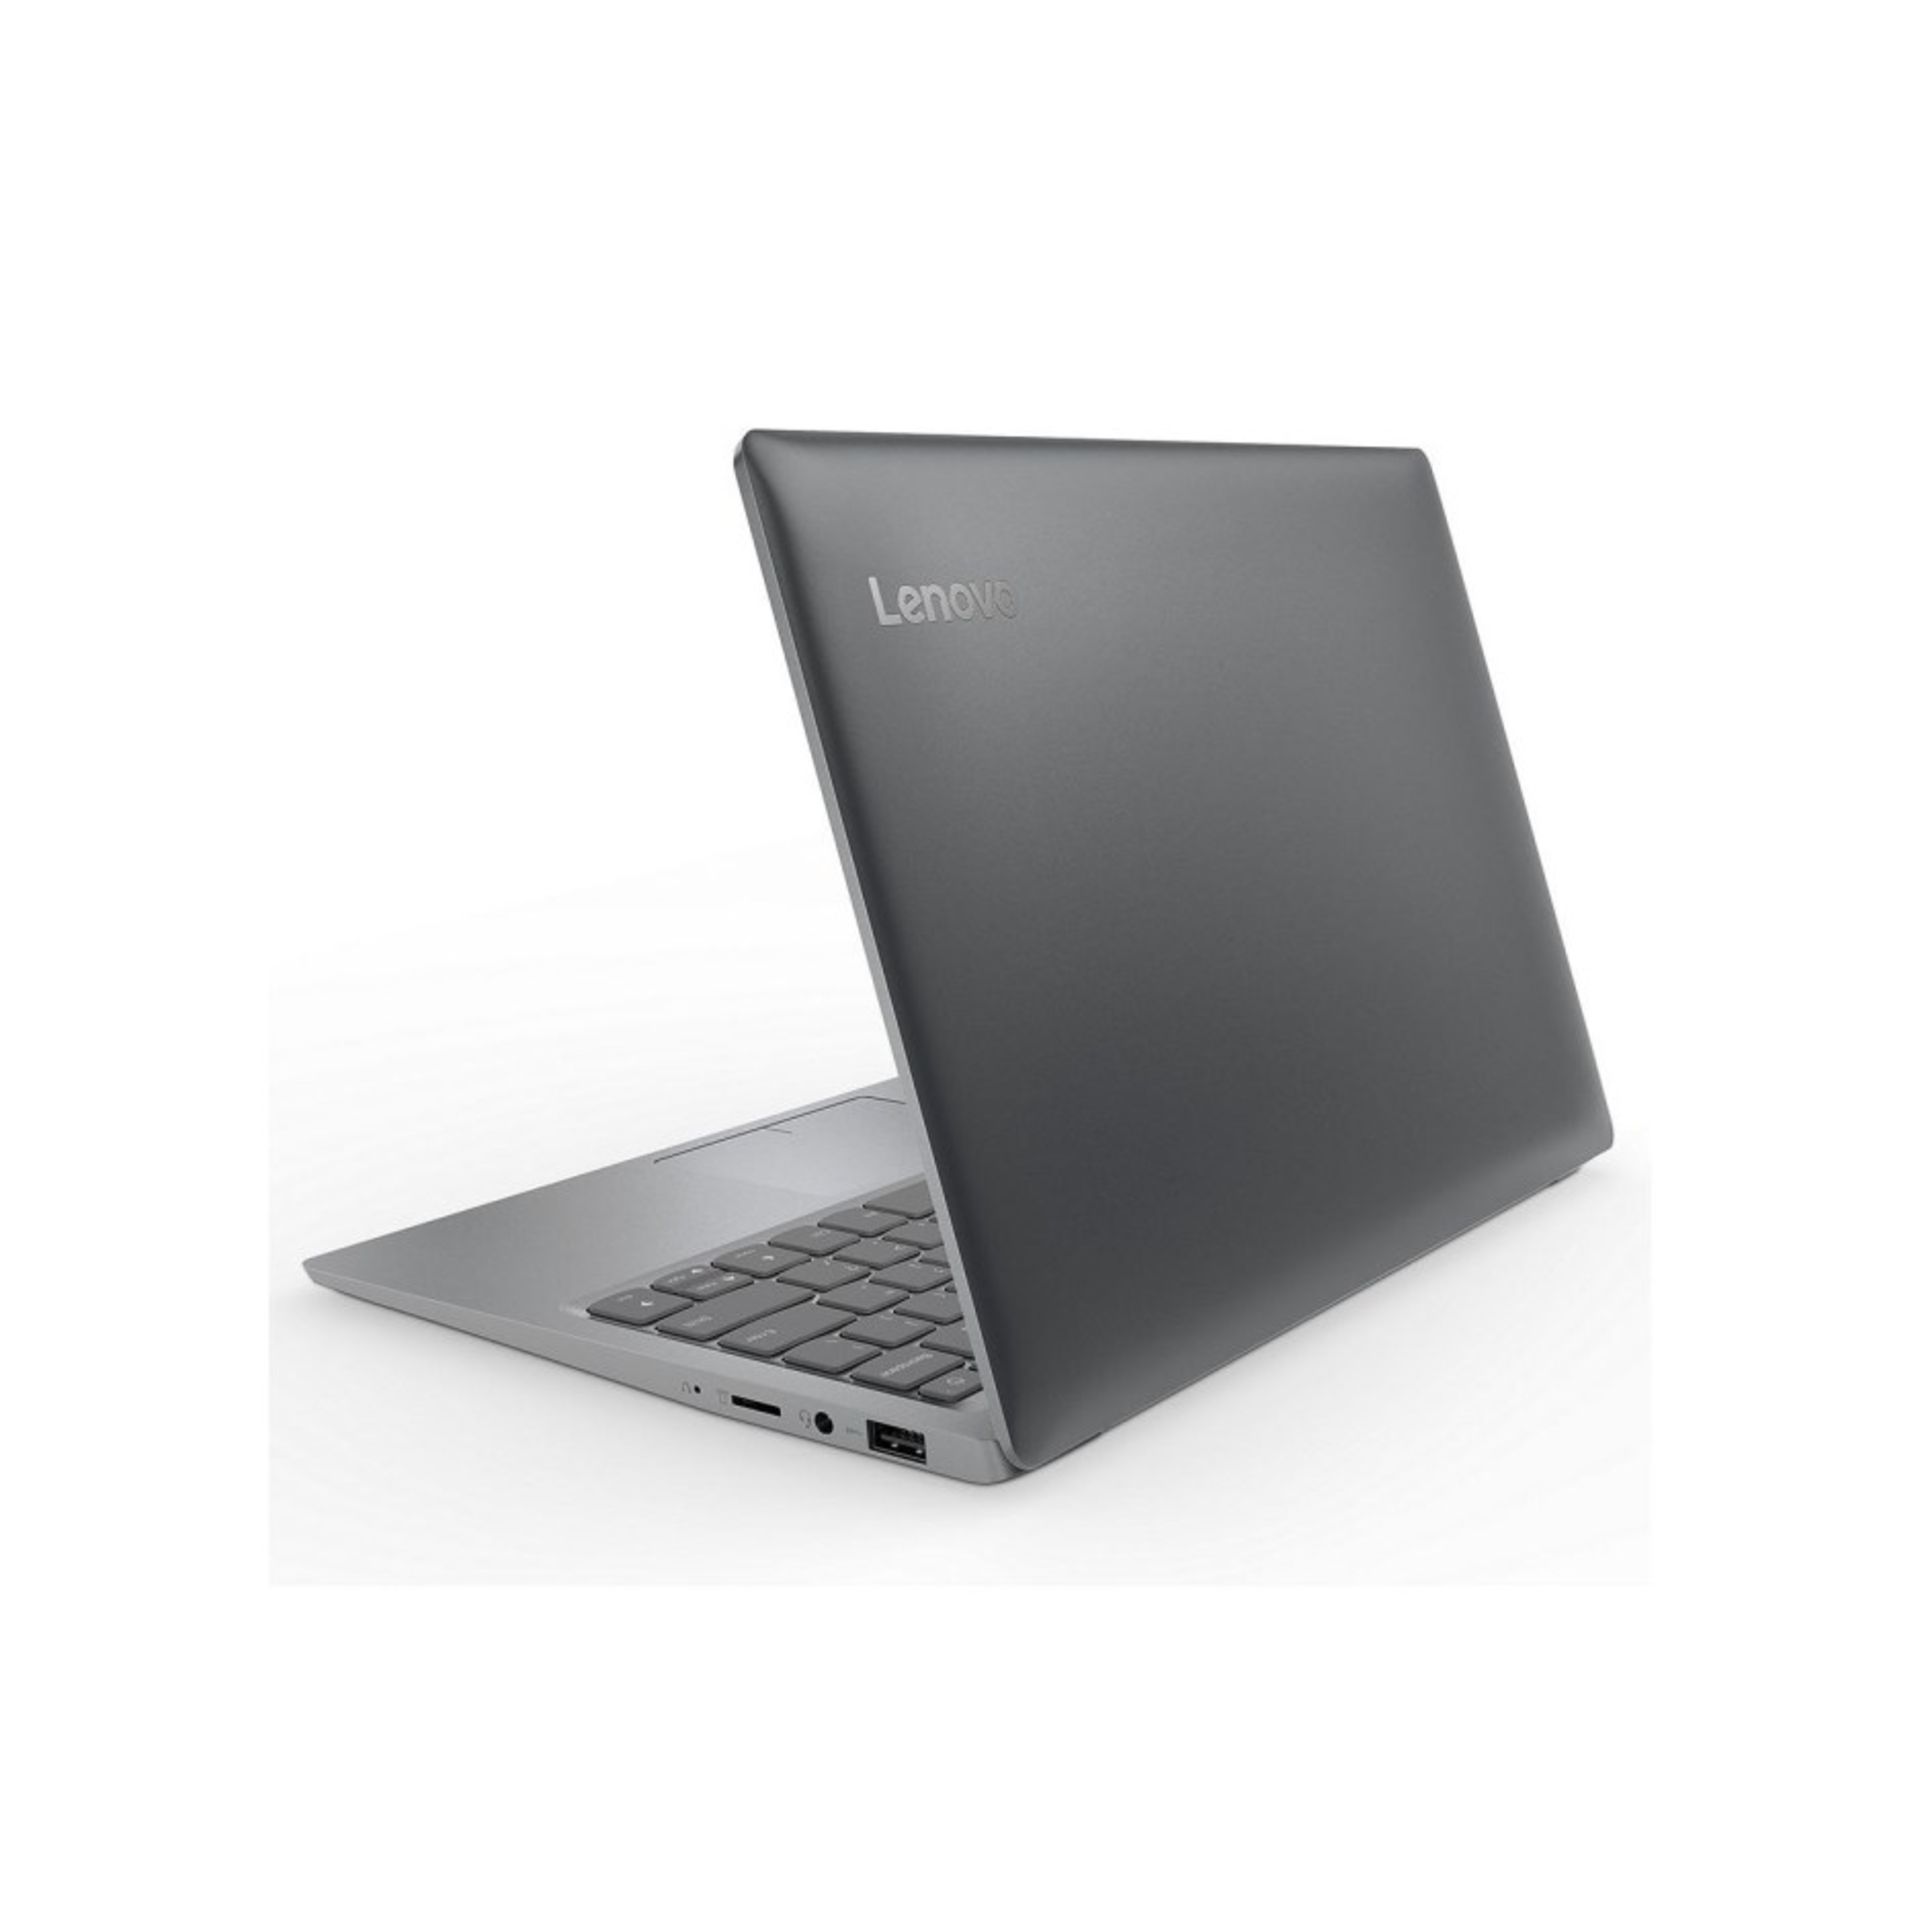 (7) 1 x Grade B - Lenovo IdeaPad 120S 81A4005PUK Laptop, Intel Celeron N3350, 4GB, 32GB eMMC 11... - Image 5 of 5